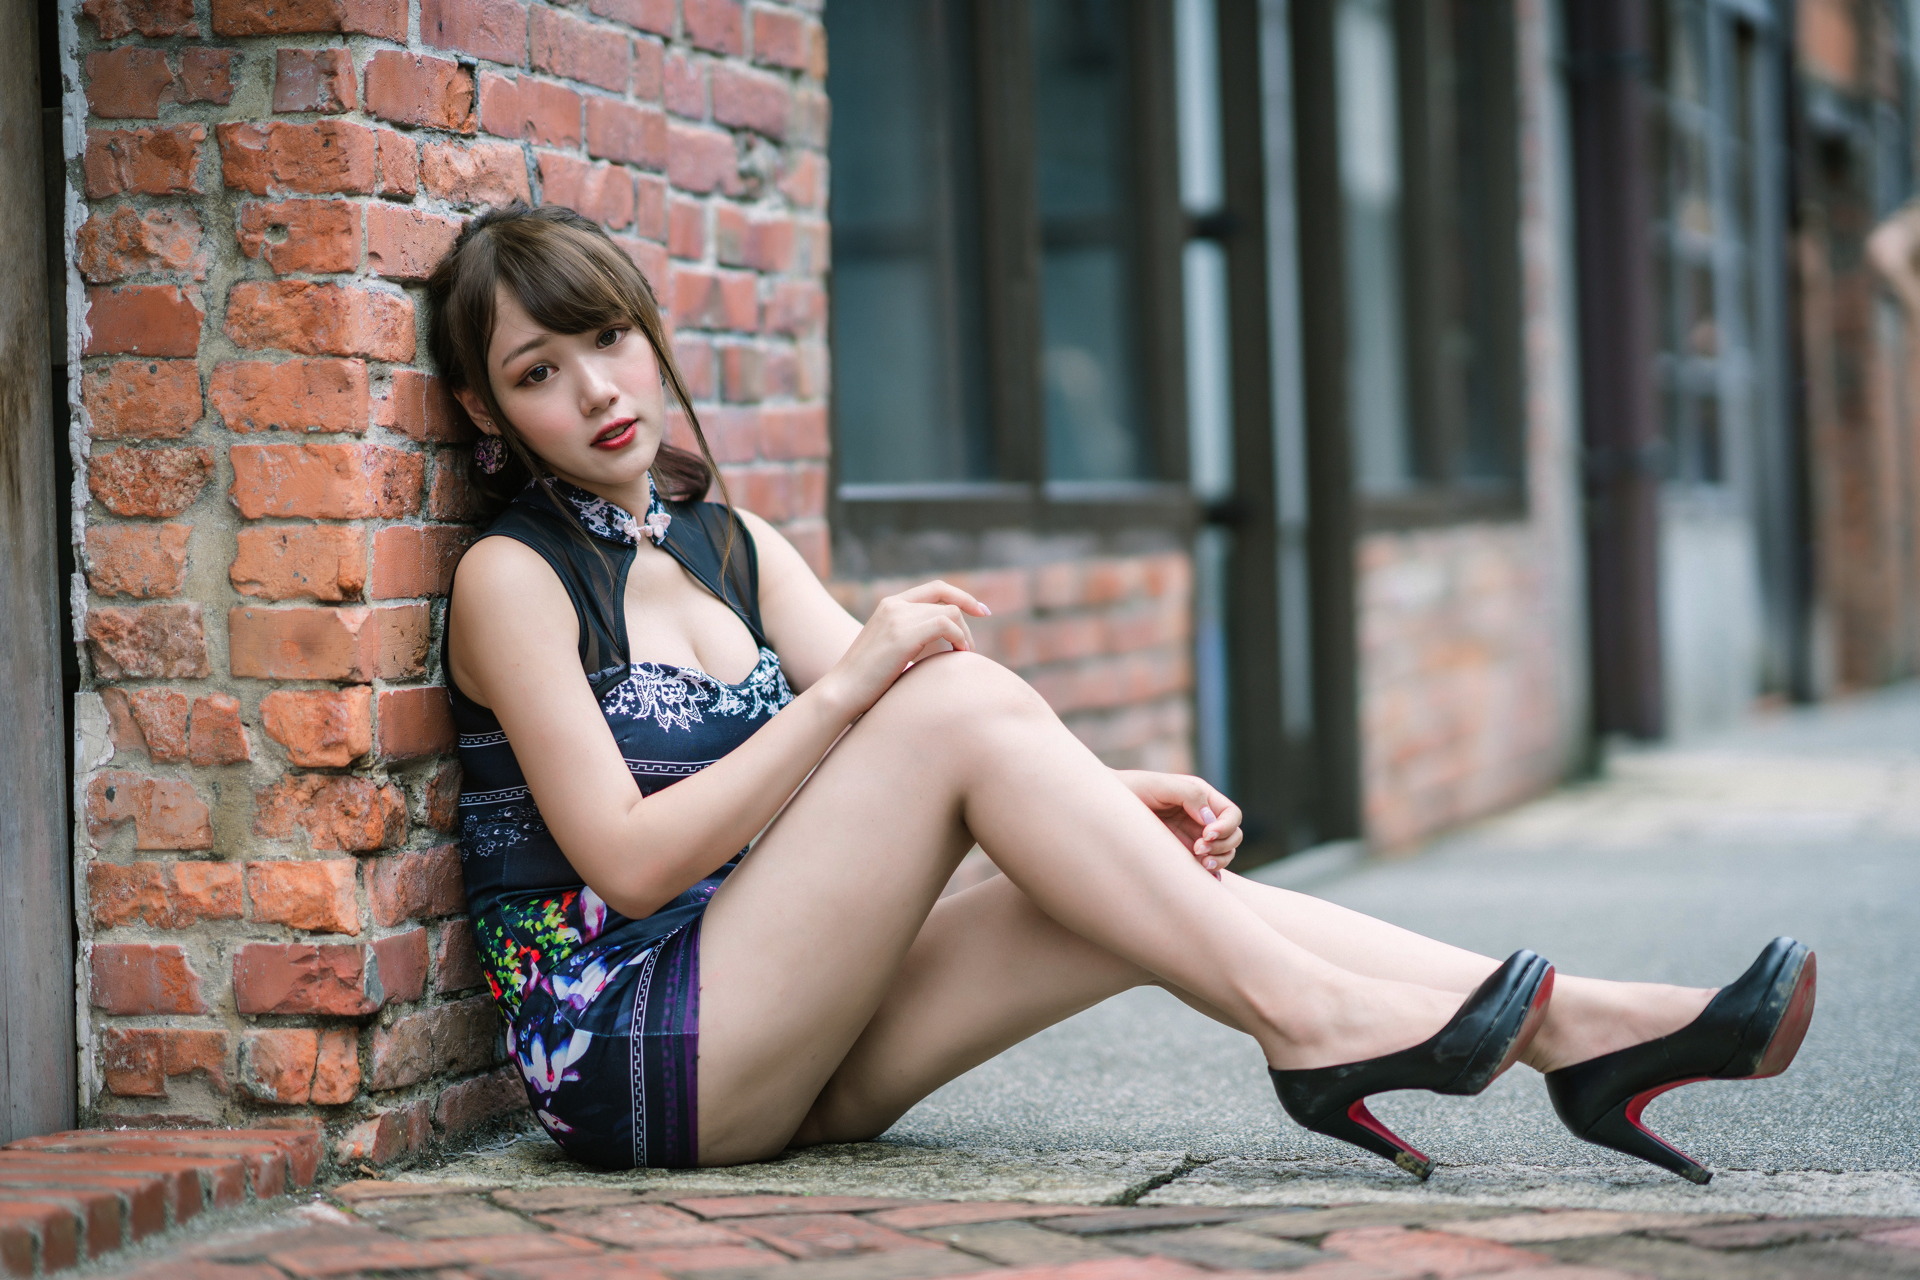 Asian Model Women Long Hair Dark Hair Sitting Leaning Bricks Wall Heels Depth Of Field High Heels Le 1920x1280